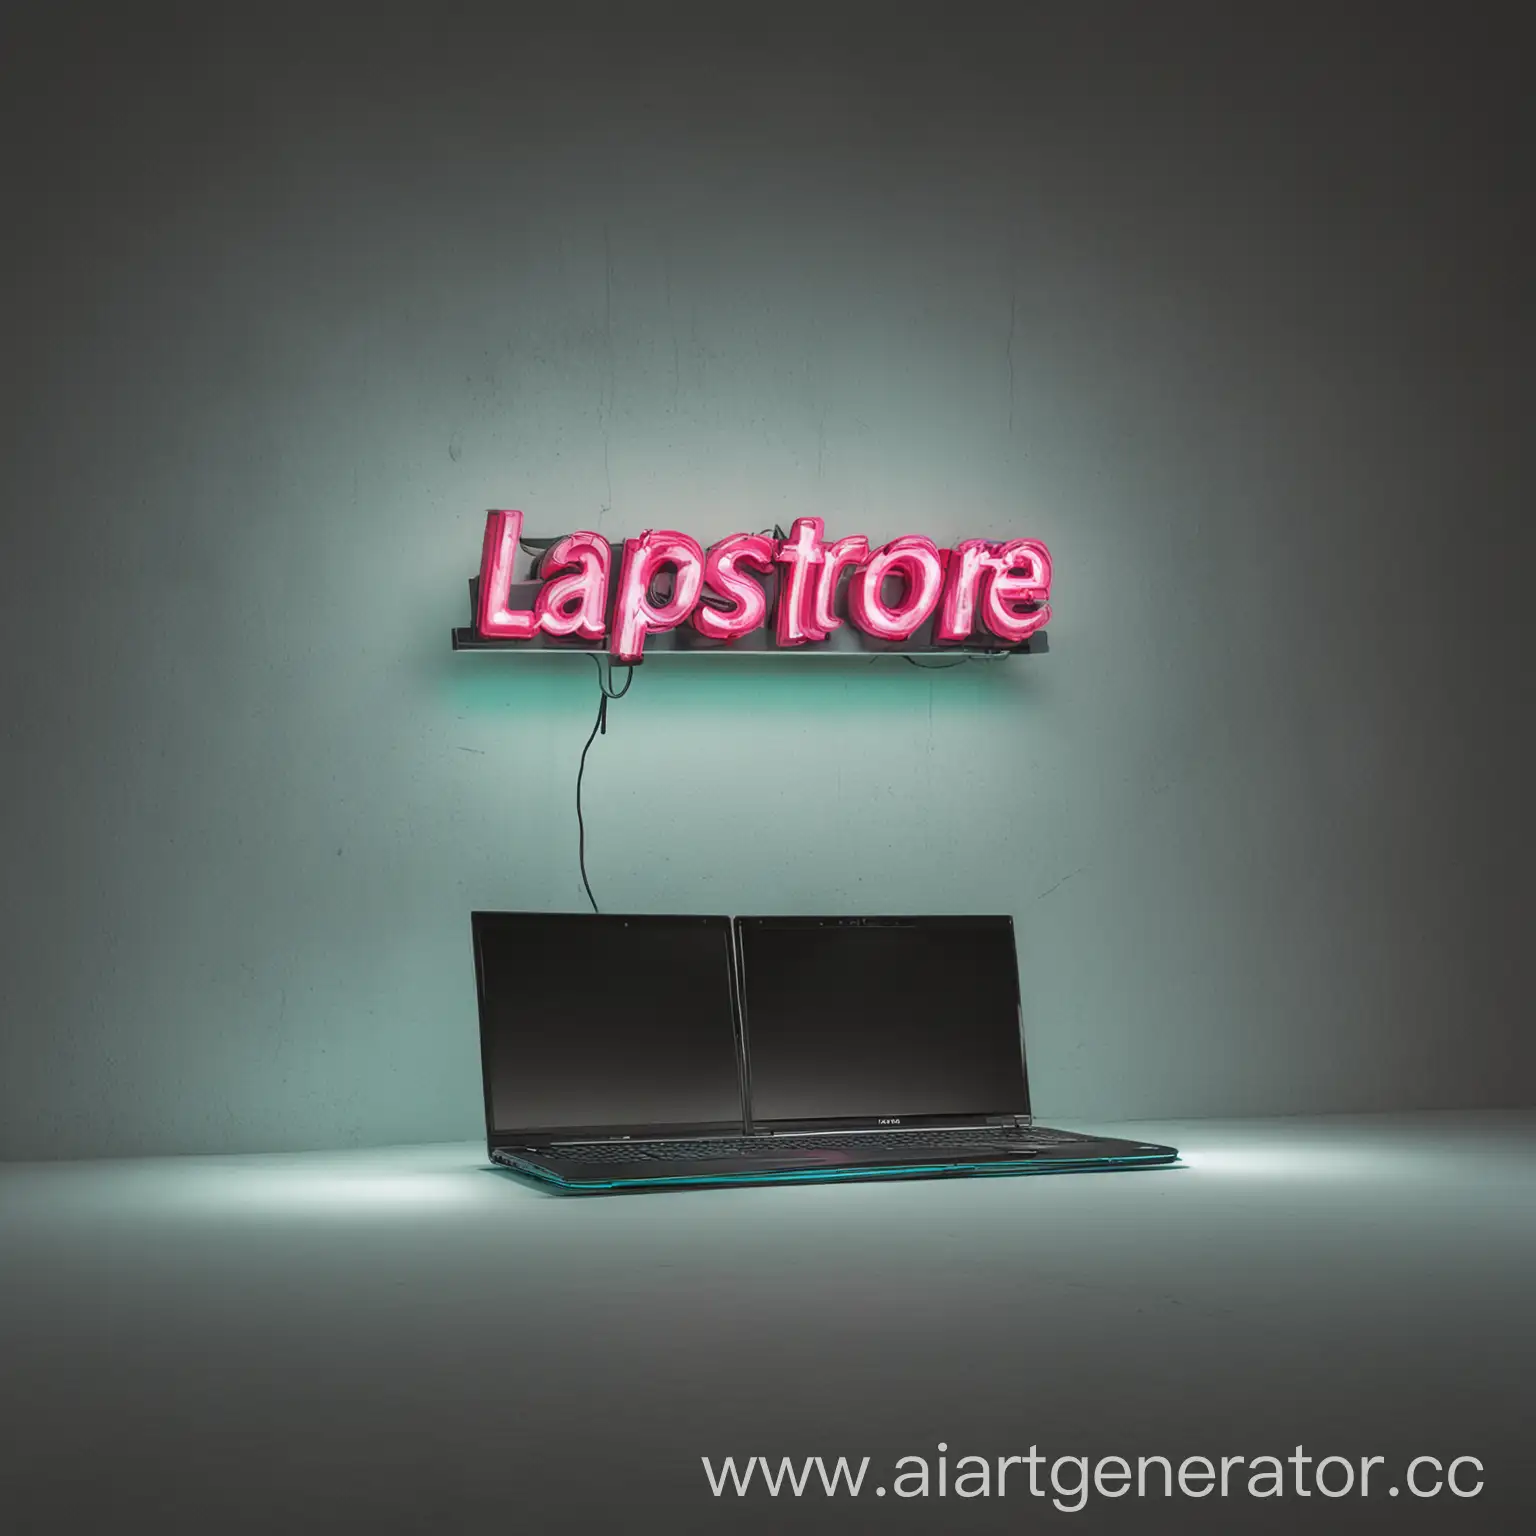 LapStore
Центр ноутбуков
Неон